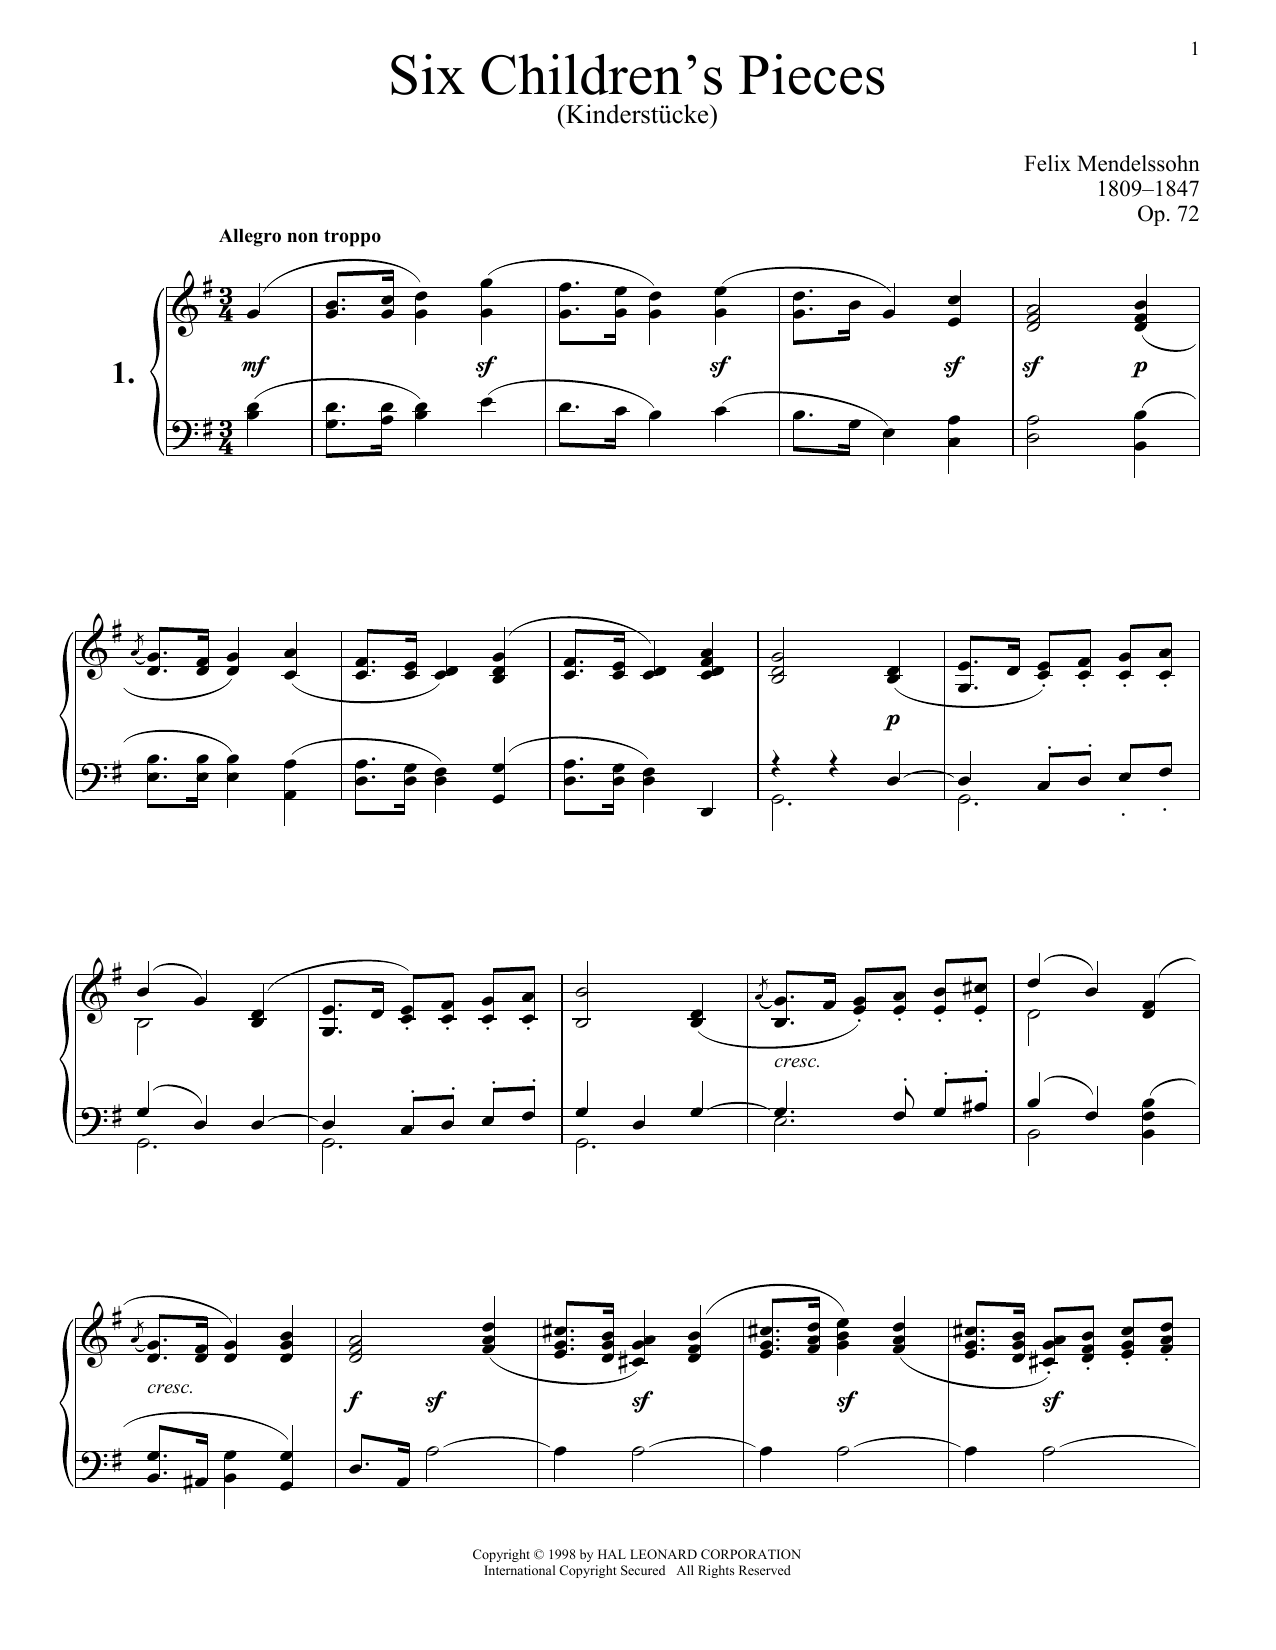 Download Felix Mendelssohn Six Children's Pieces (Kinderstucke), O Sheet Music